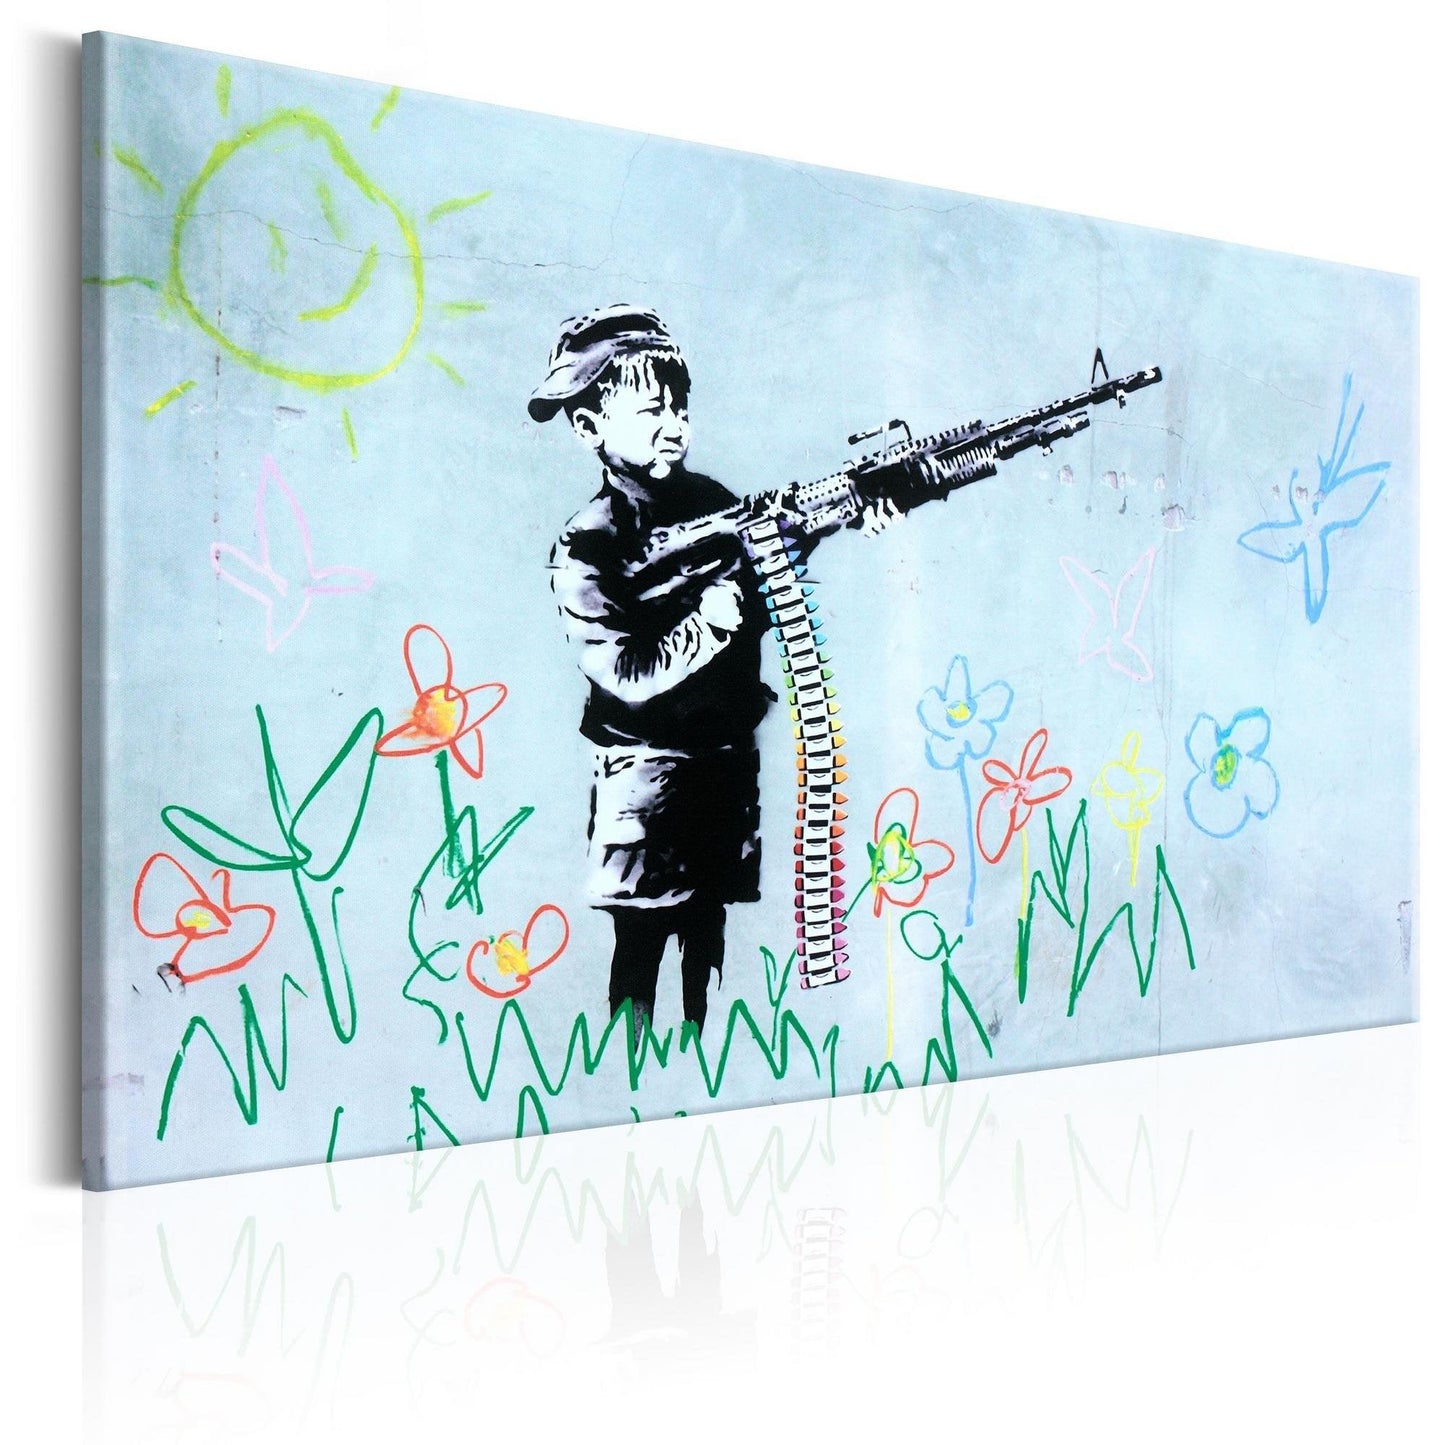 Canvas Print - Boy with Gun by Banksy - www.trendingbestsellers.com